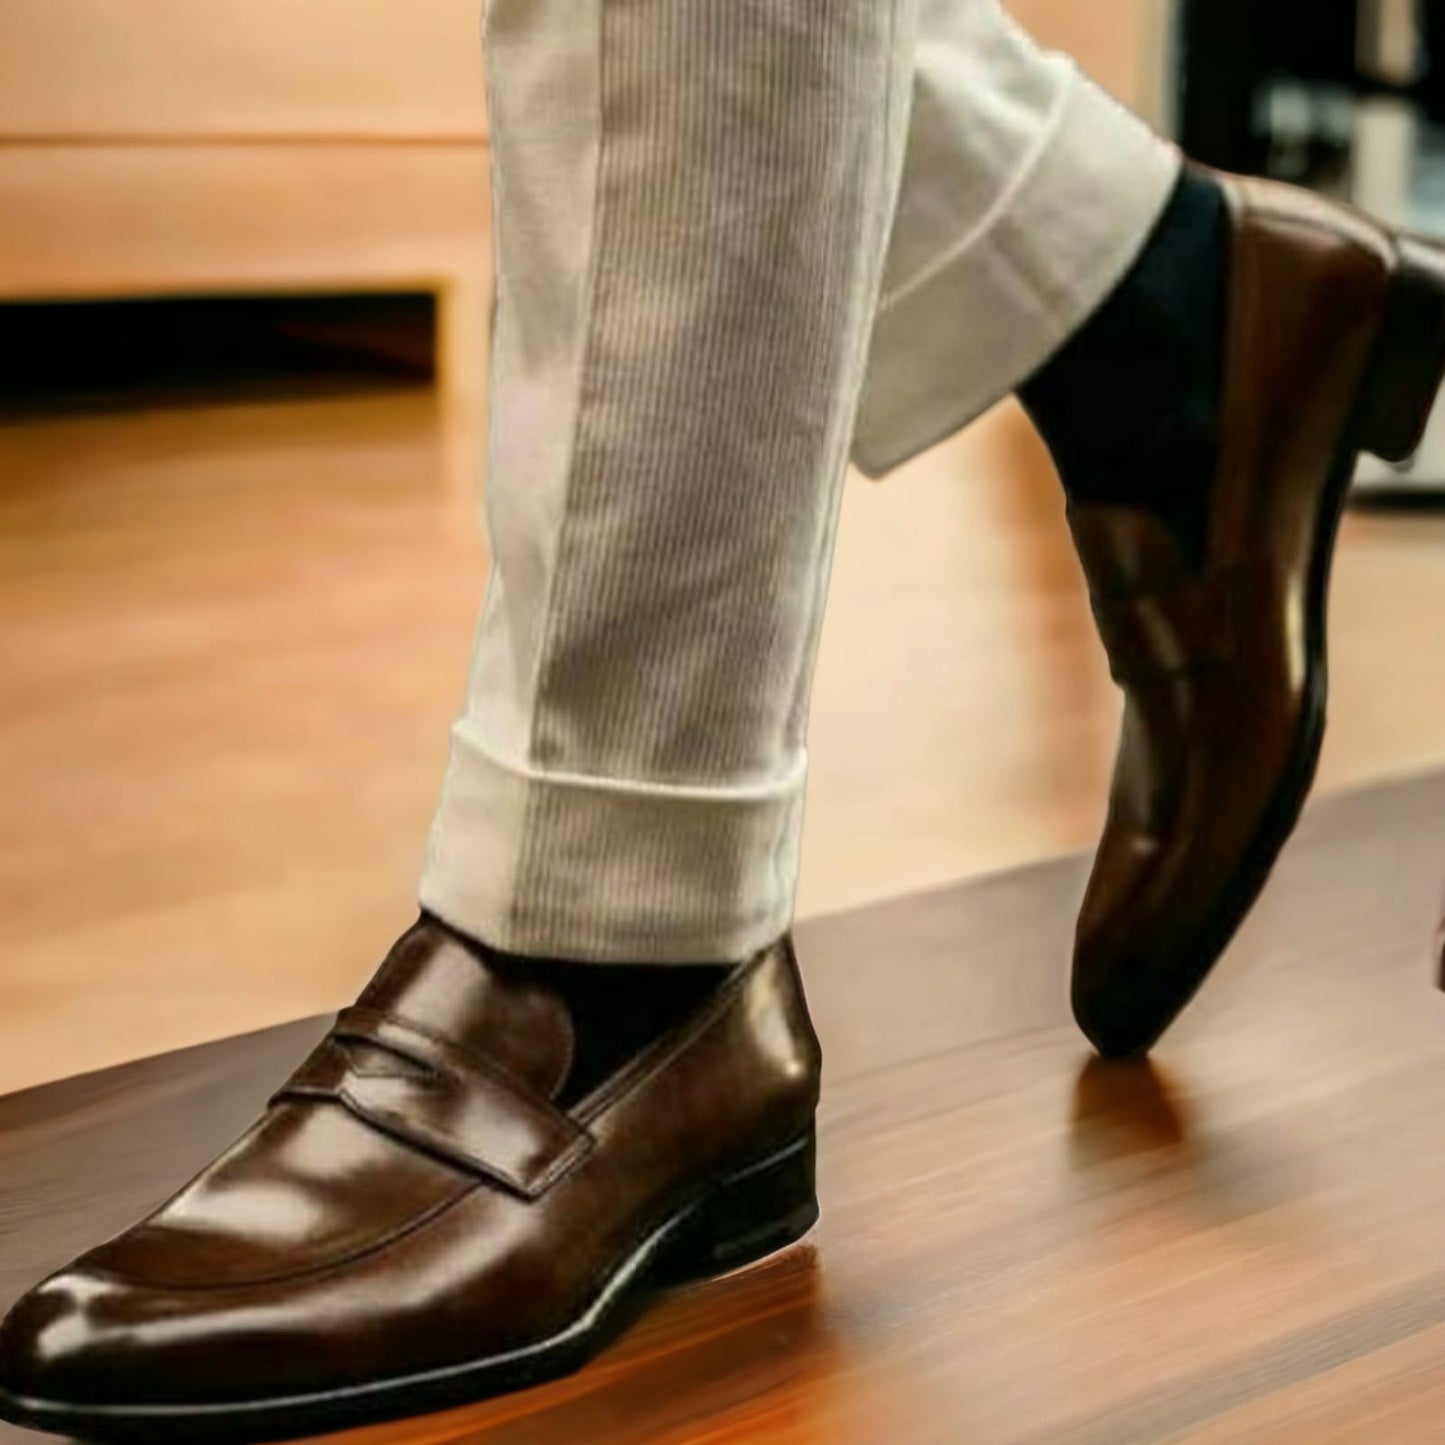 Jack Marc Fashion Loafer Dress Shoes Formal & Casual Wear